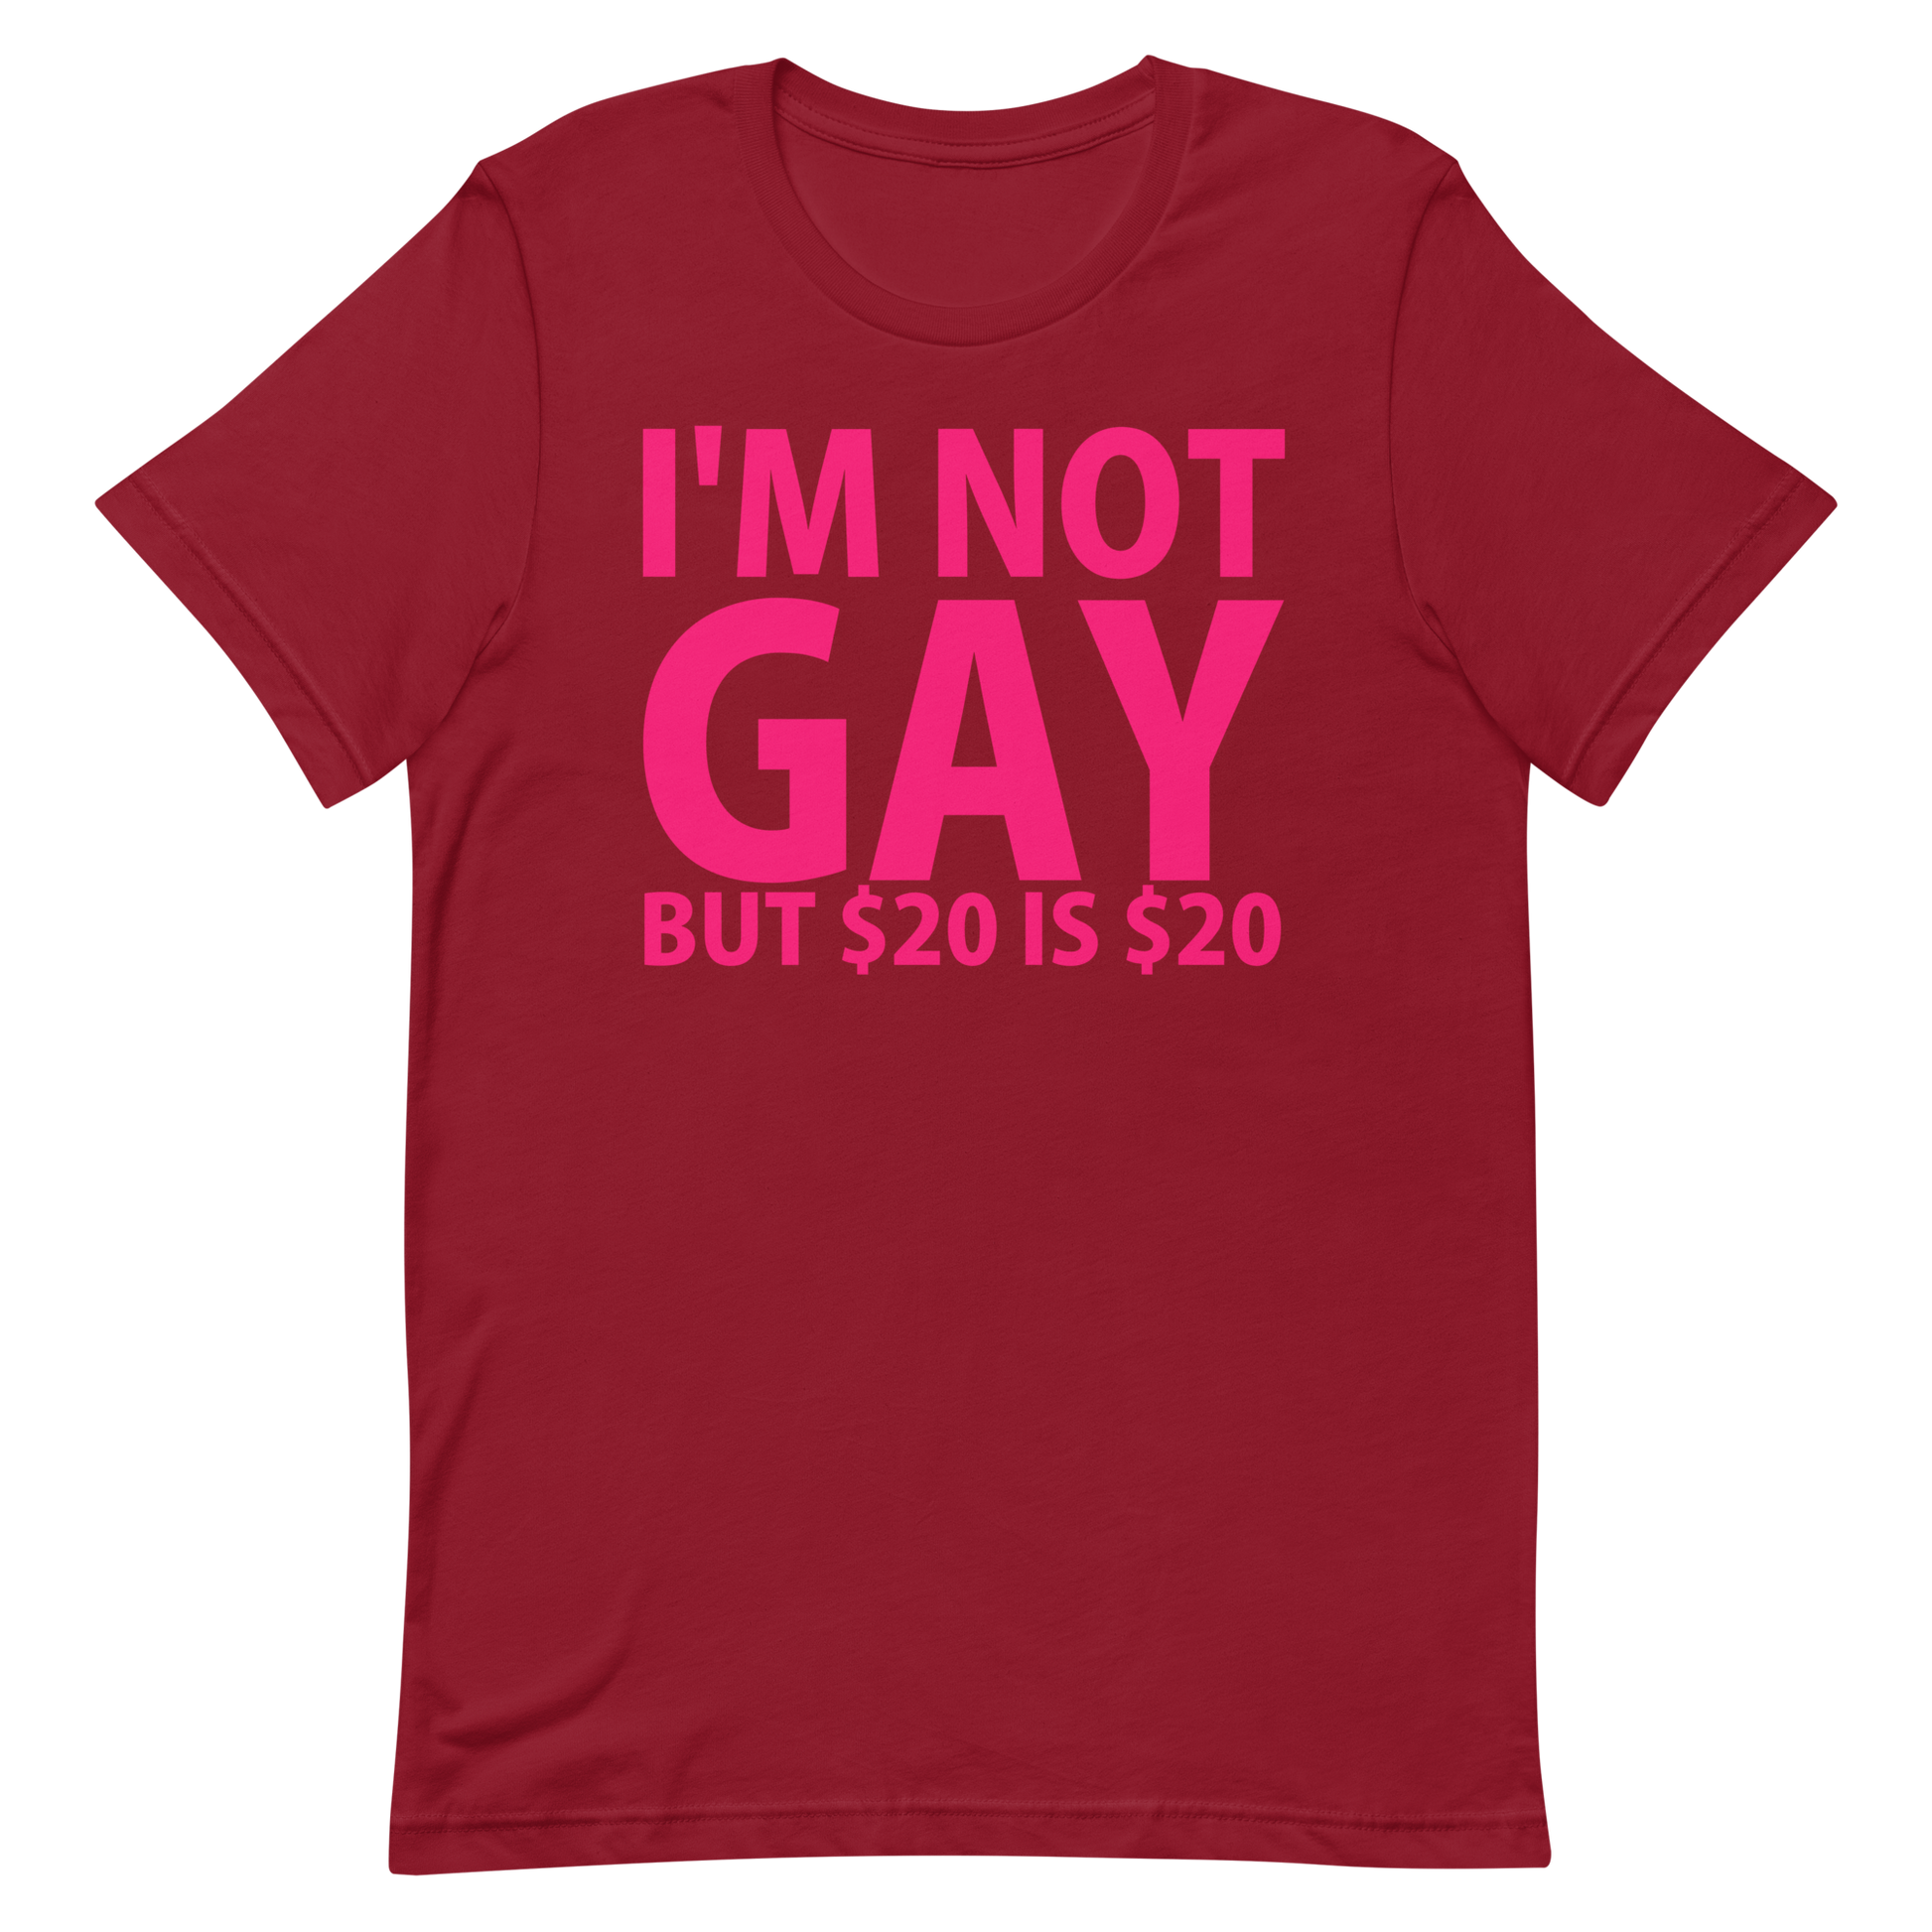 I'm Not Gay But $20 is $20 T-Shirt - Cardinal